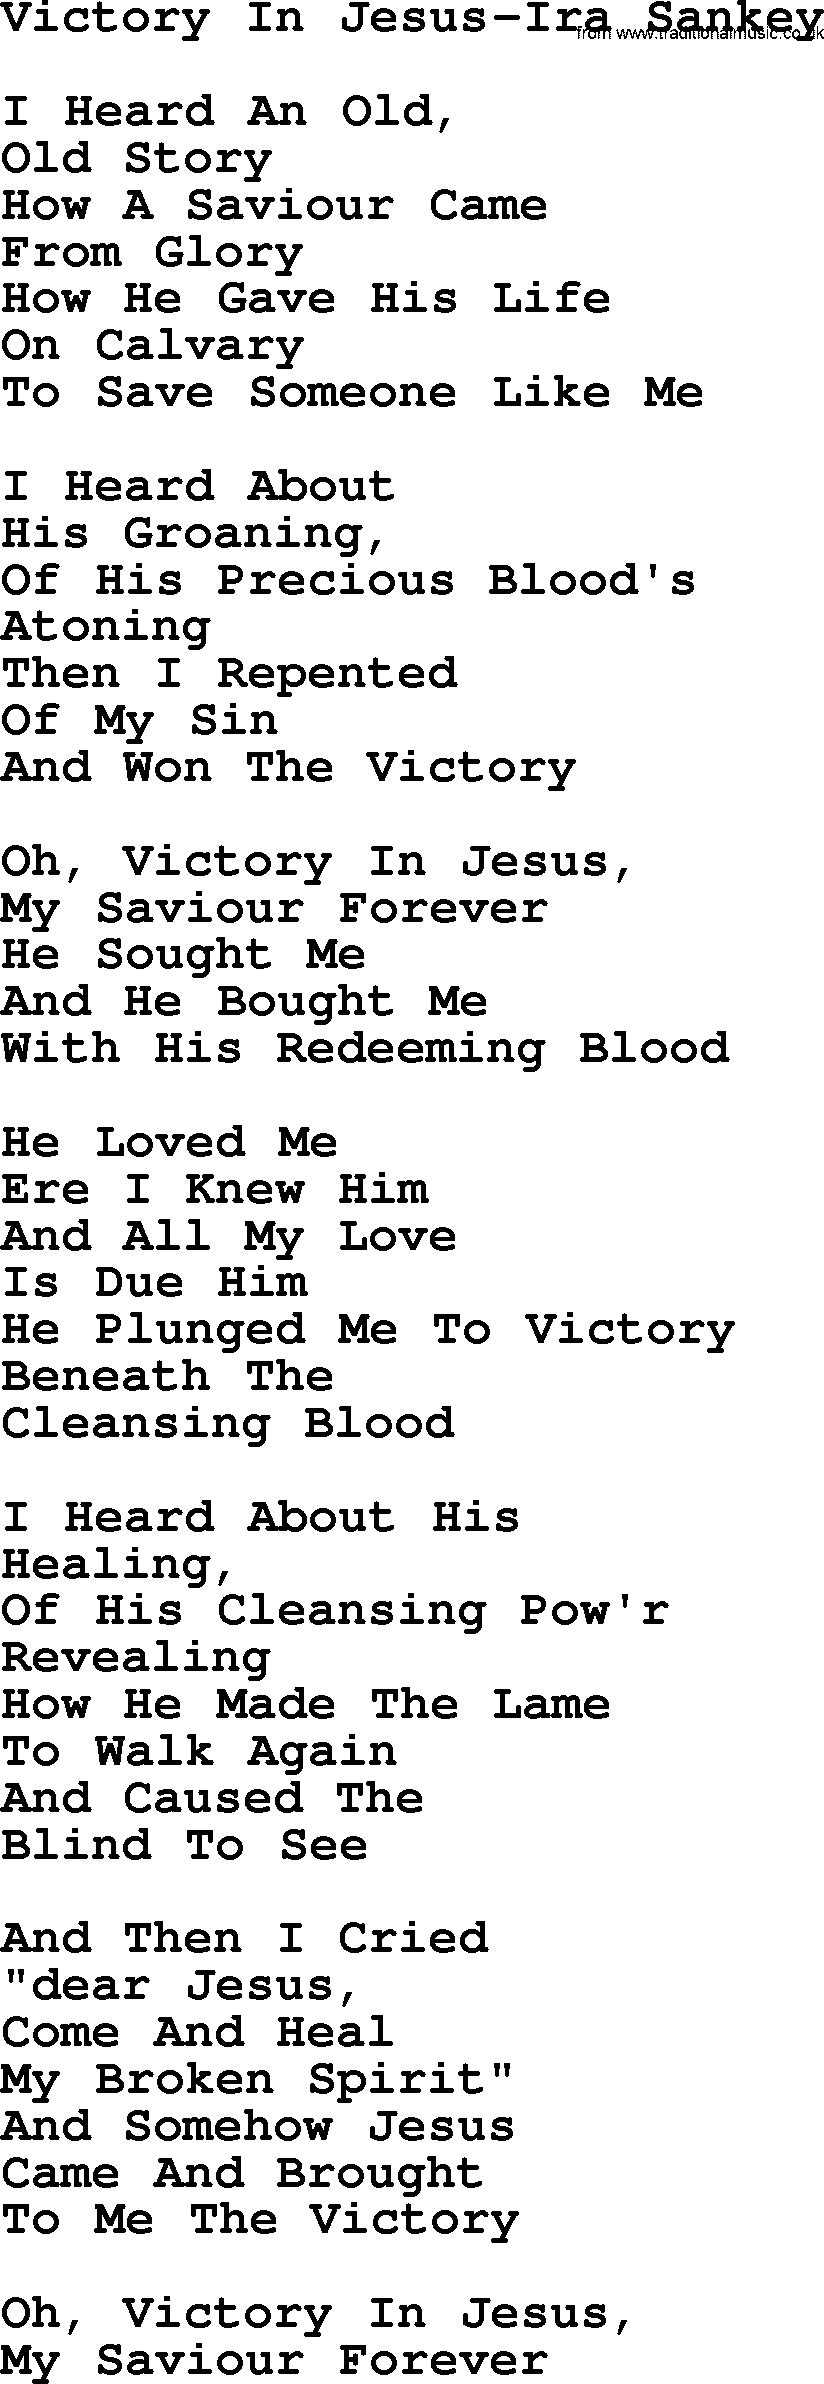 Ira Sankey hymn: Victory In Jesus-Ira Sankey, lyrics